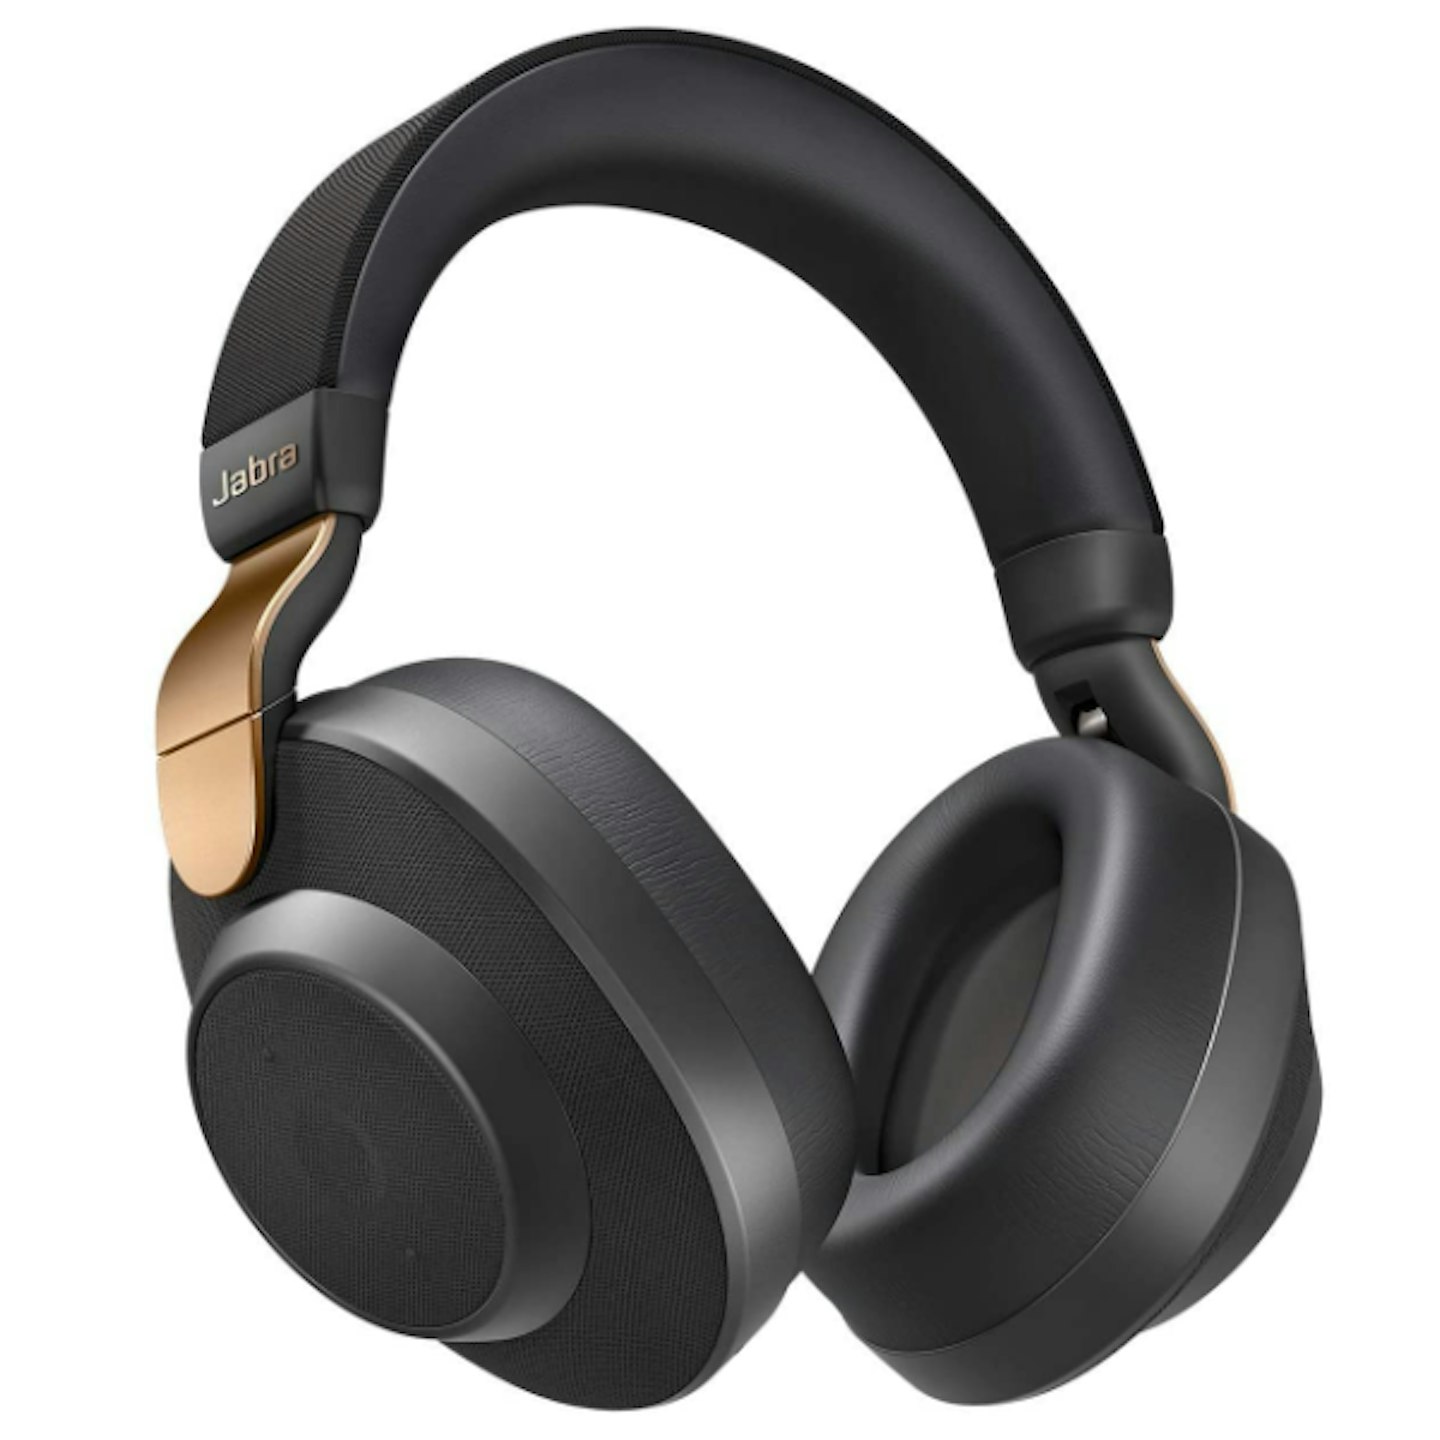 Jabra 85h Wireless Noise-Cancelling Headphones